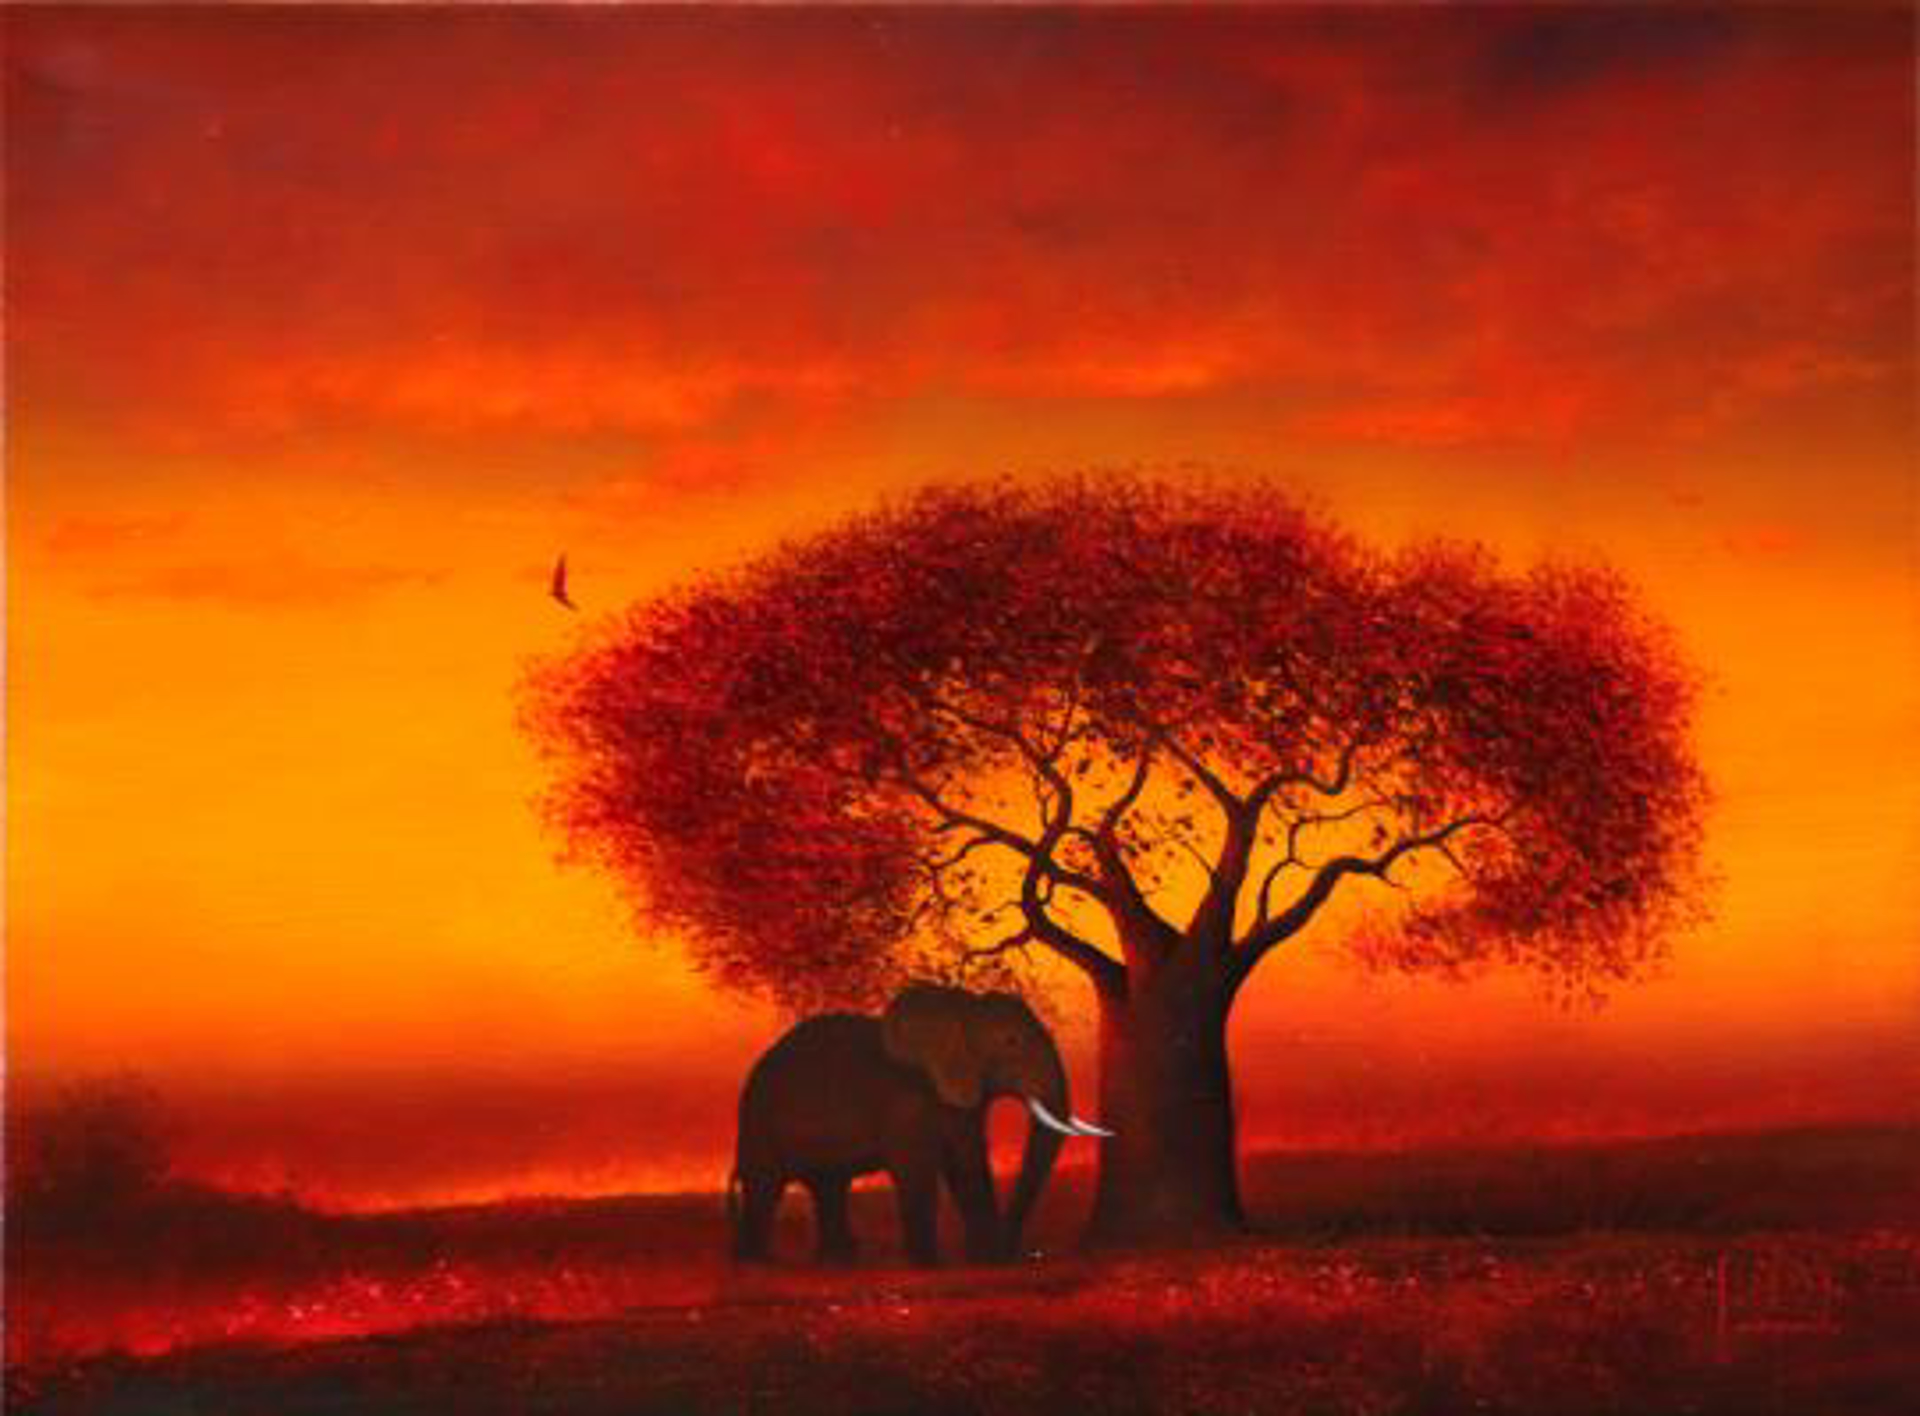 Africa Sun by Dario Campanile